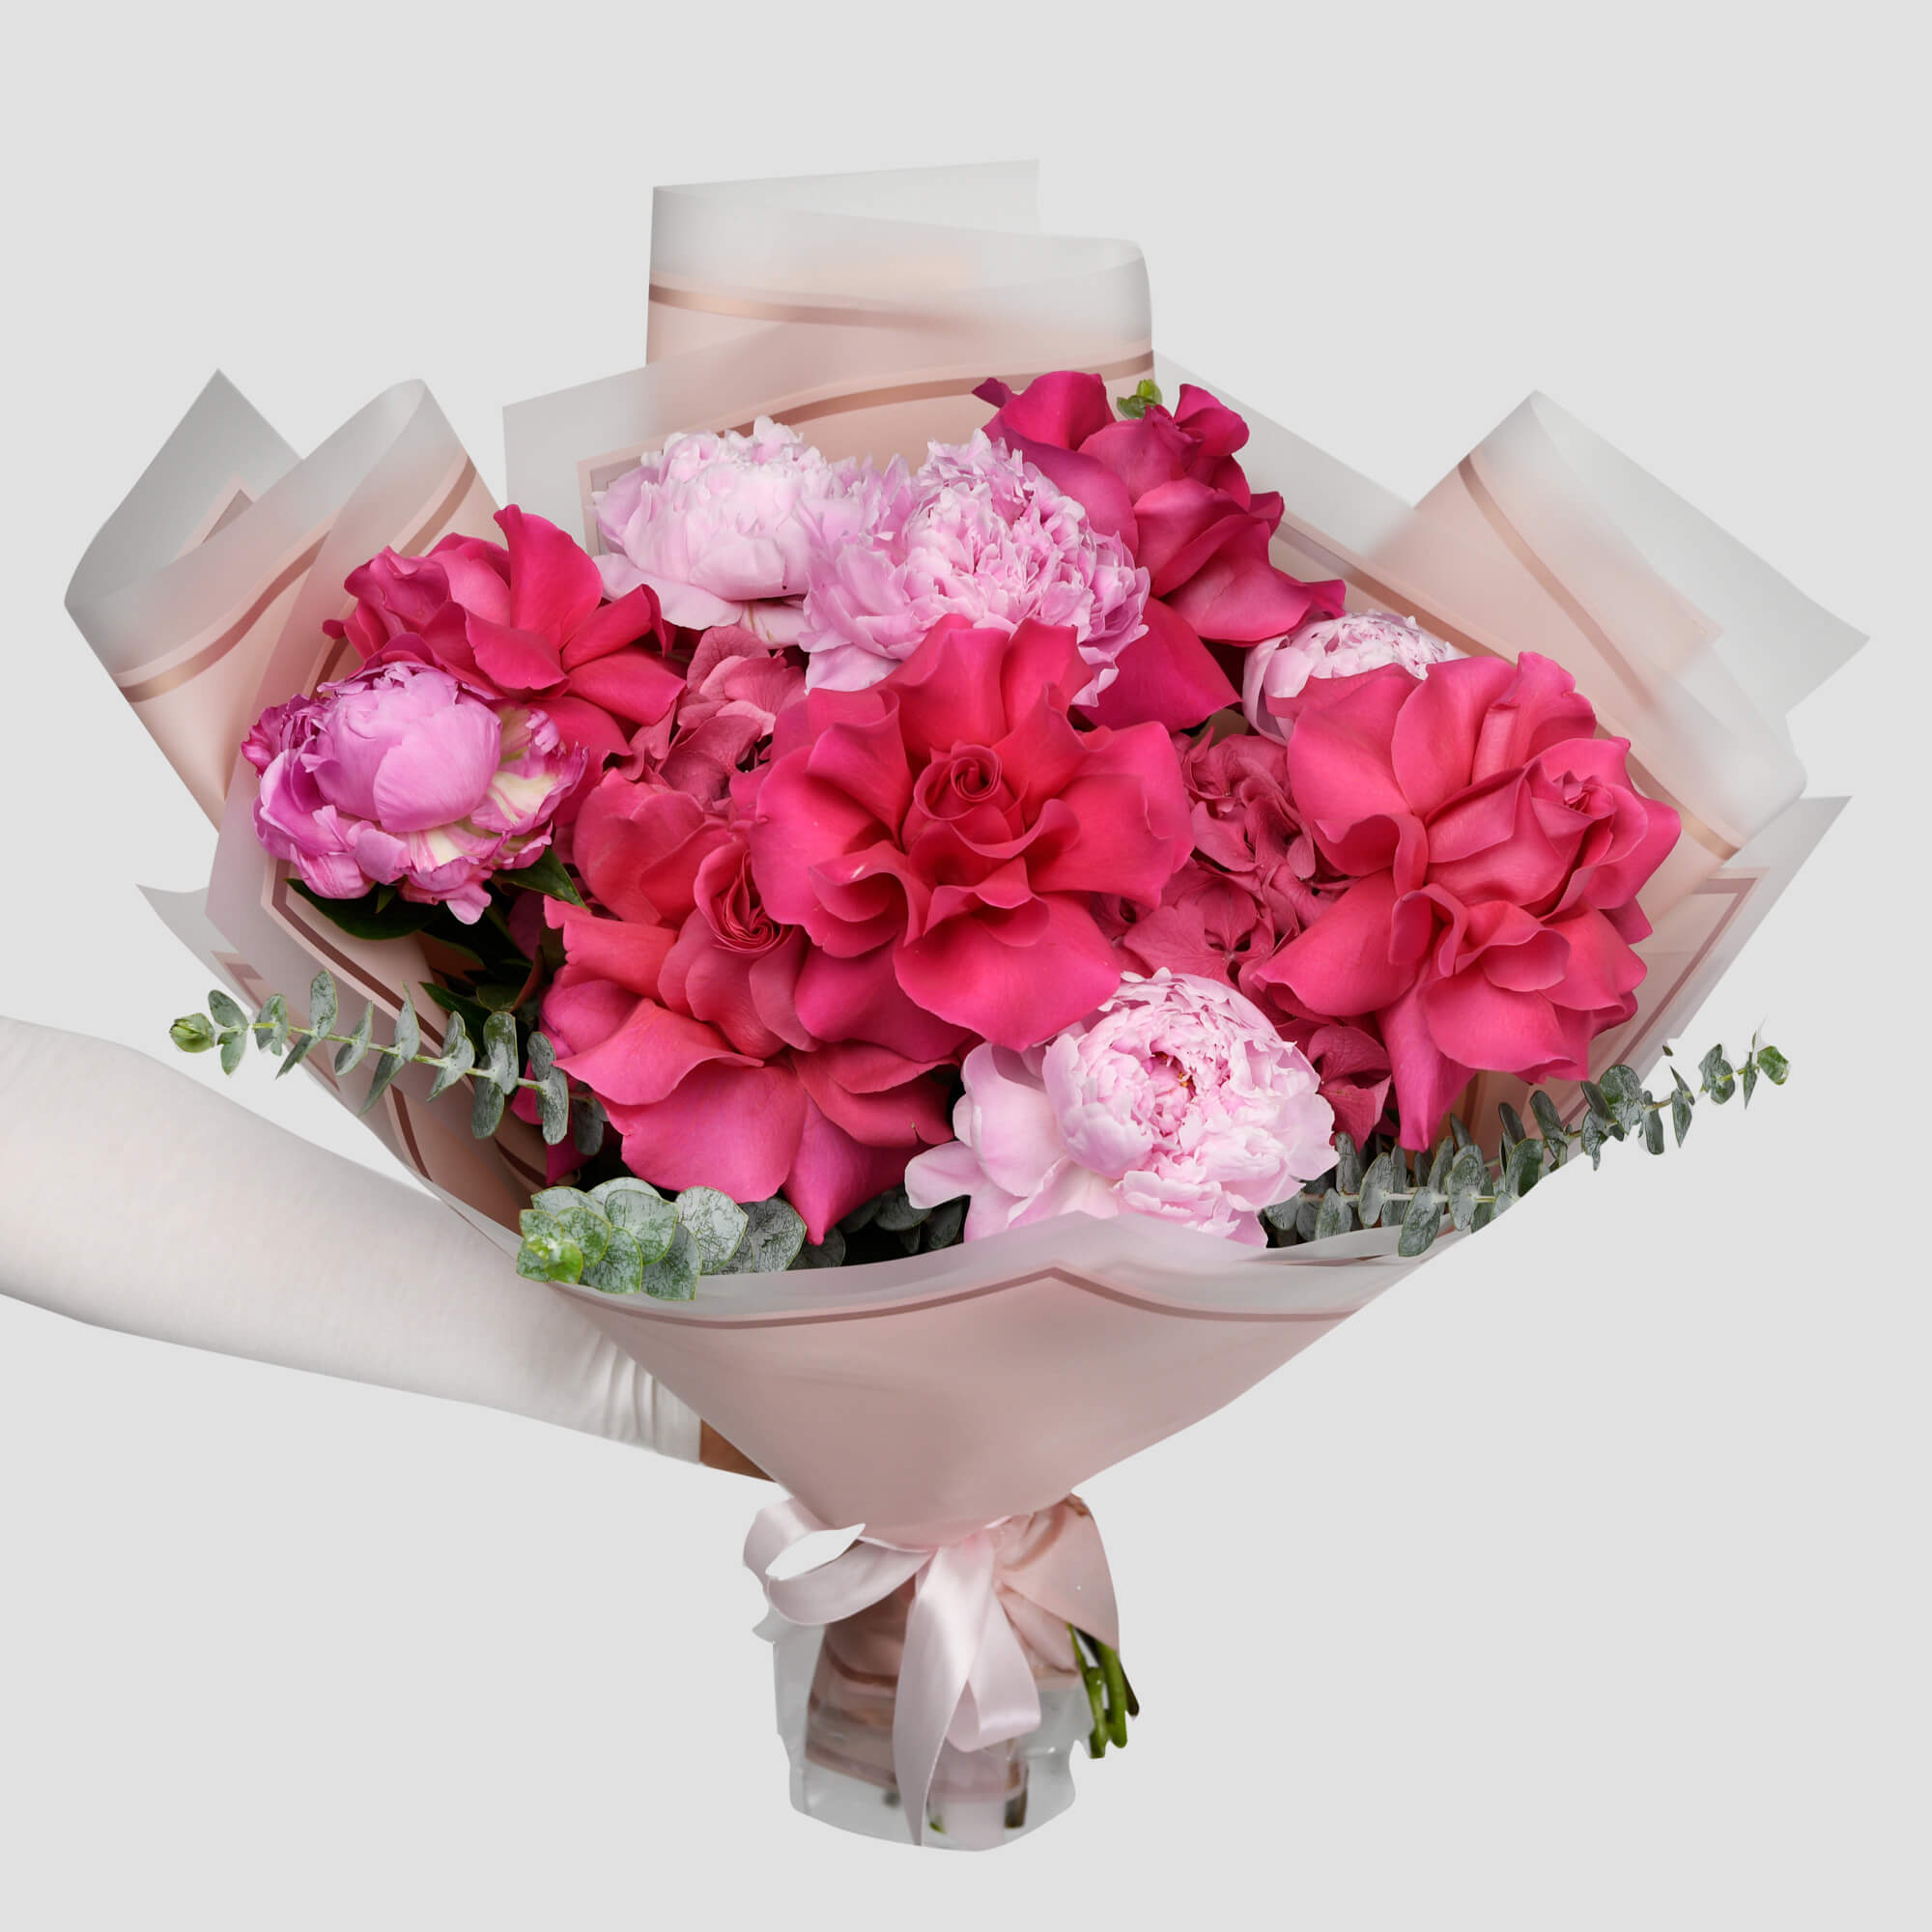 Buchet cu trandafiri Pink, hortensie si bujori roz, 1